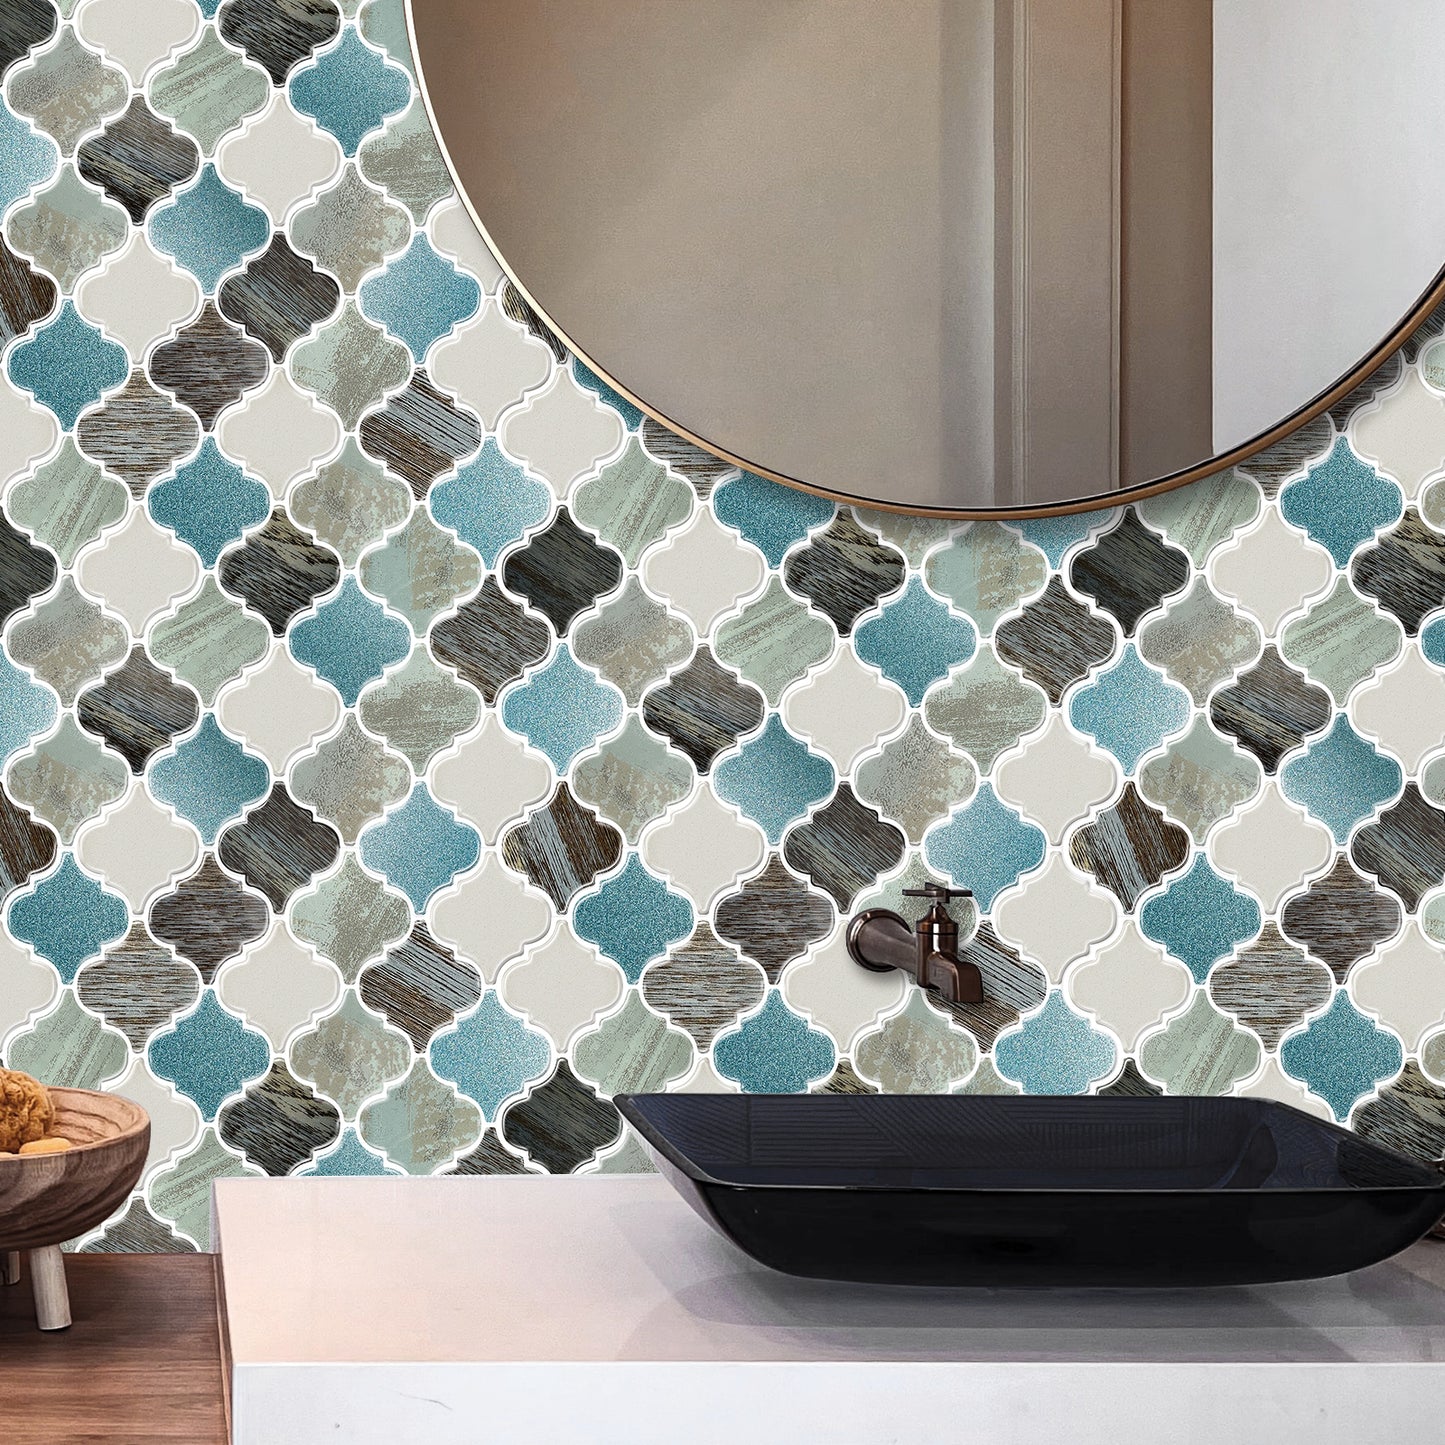 10-Sheet Mosaic Tiles Peel and Stick Backsplash Kitchen  2.5mm Thicker Design - Elegant Turquoise